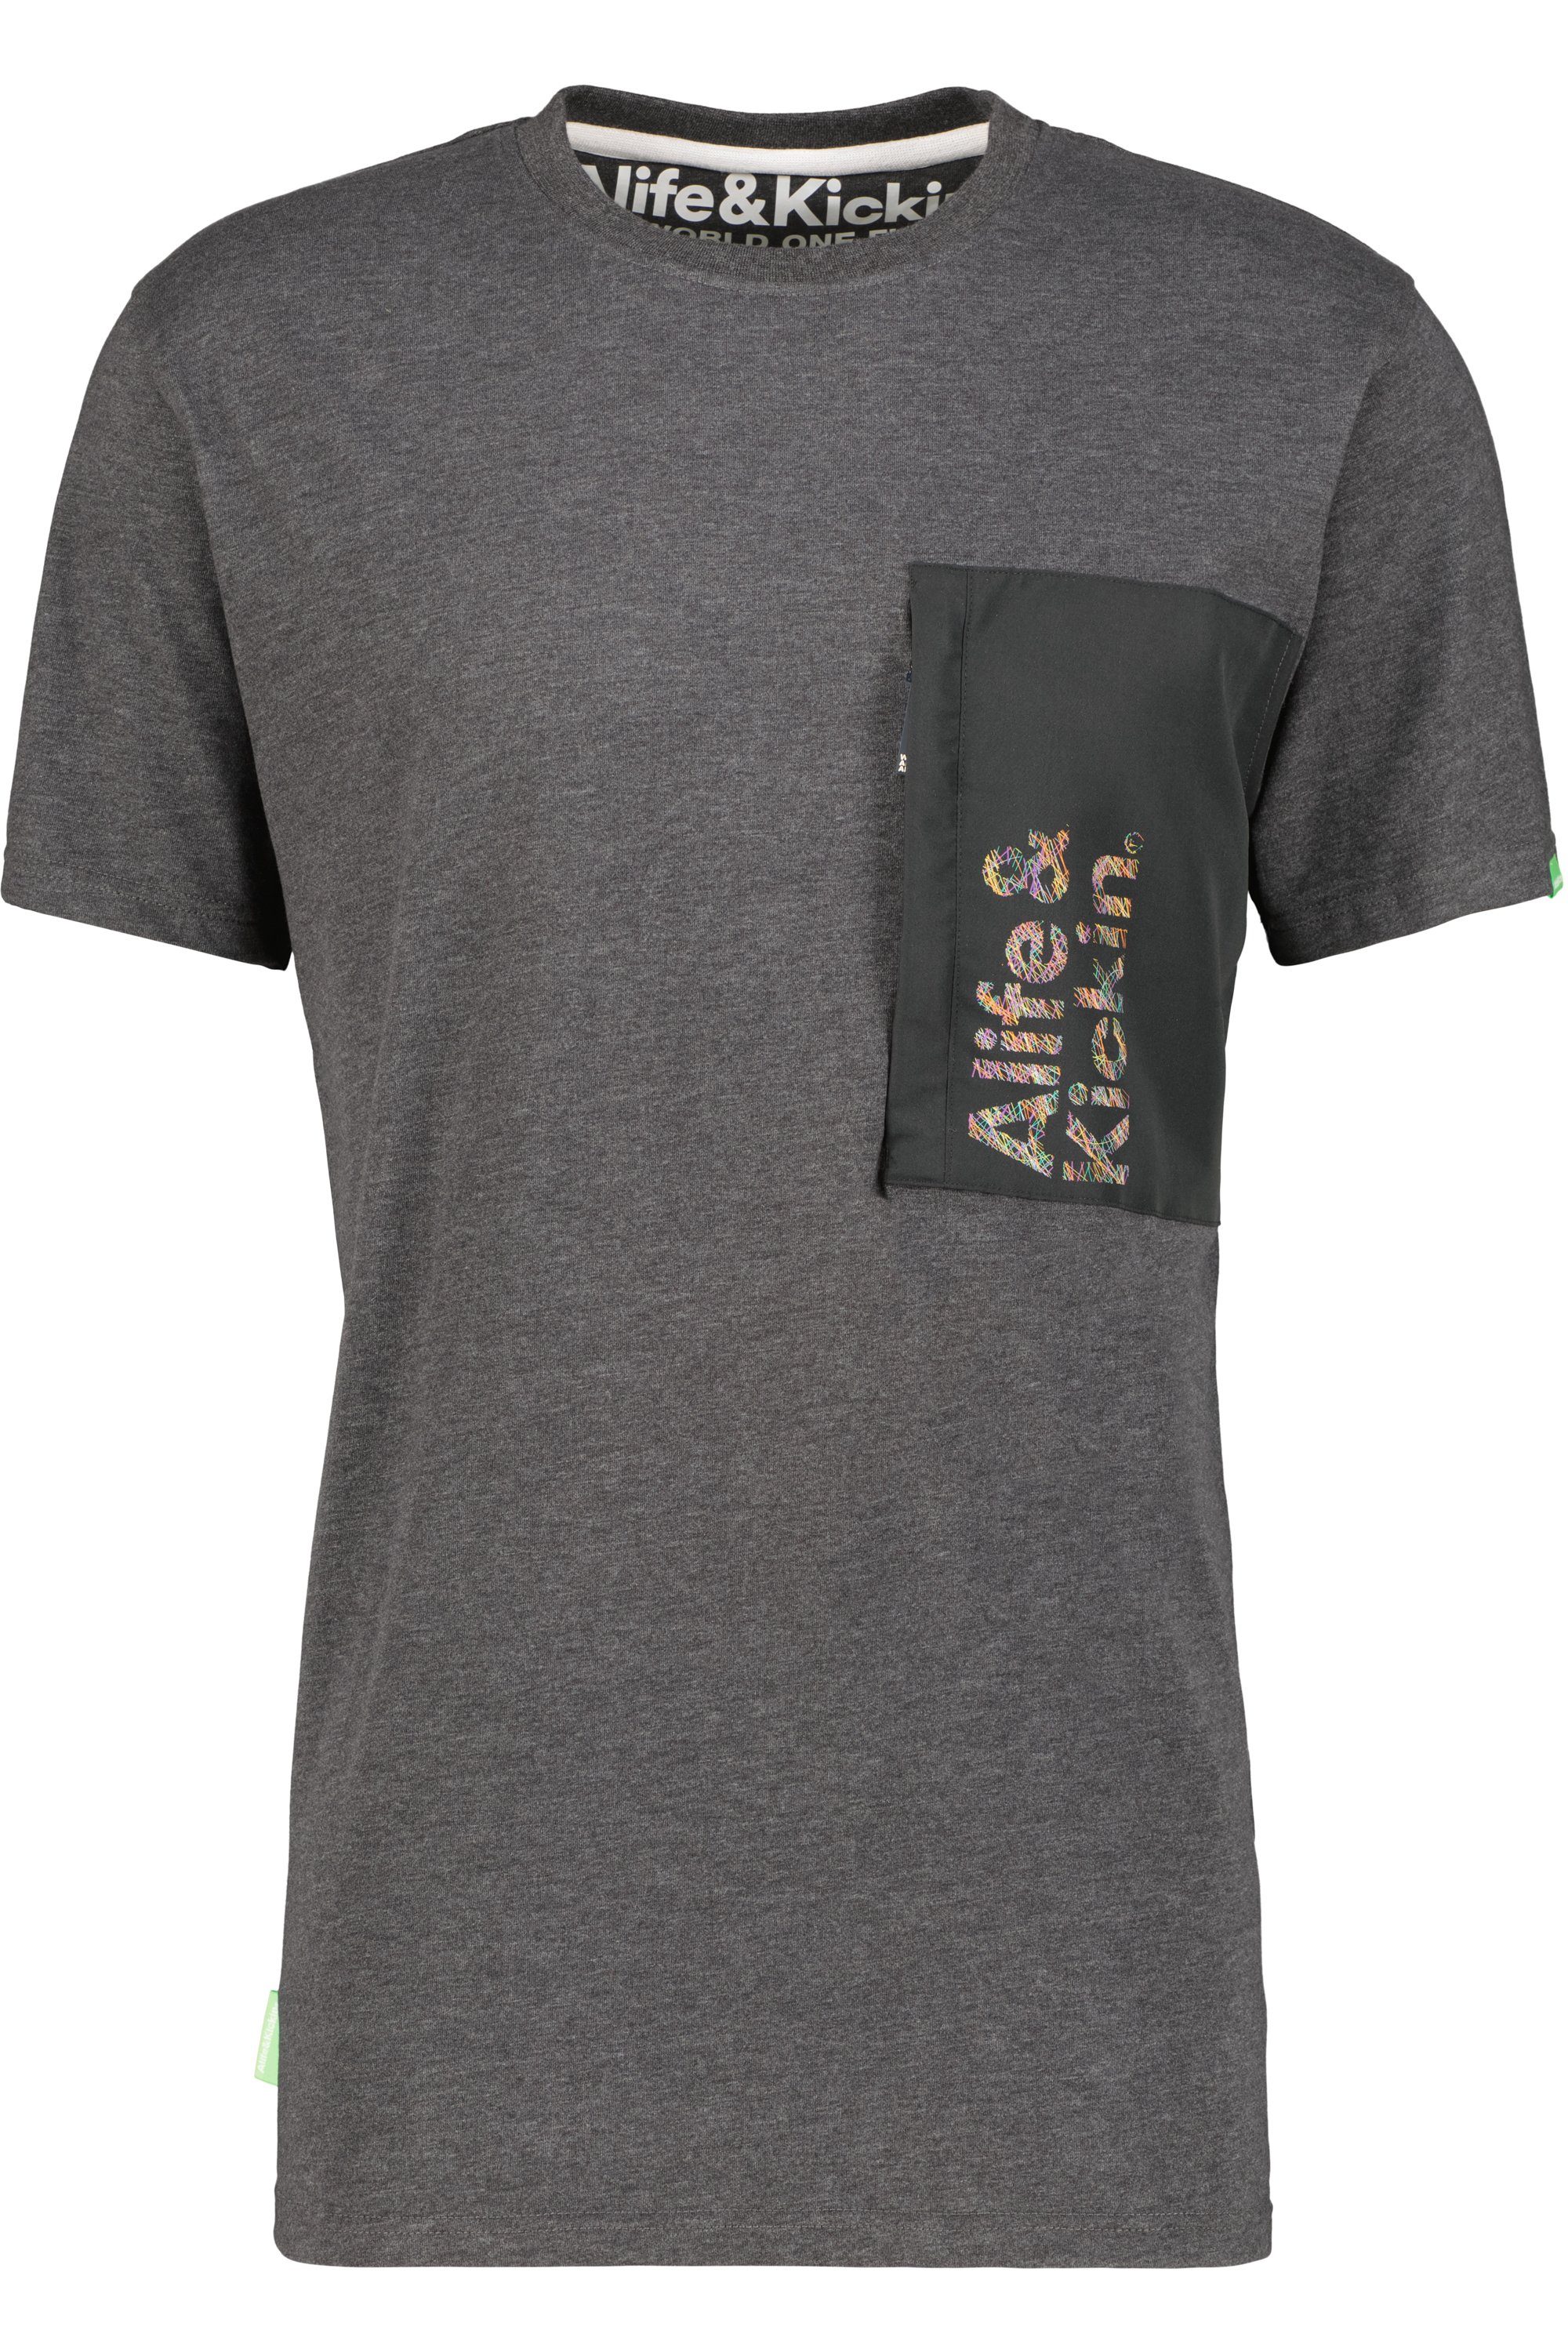 T-Shirt T-Shirt Herren & Kickin Alife Shirt RossAK moonless